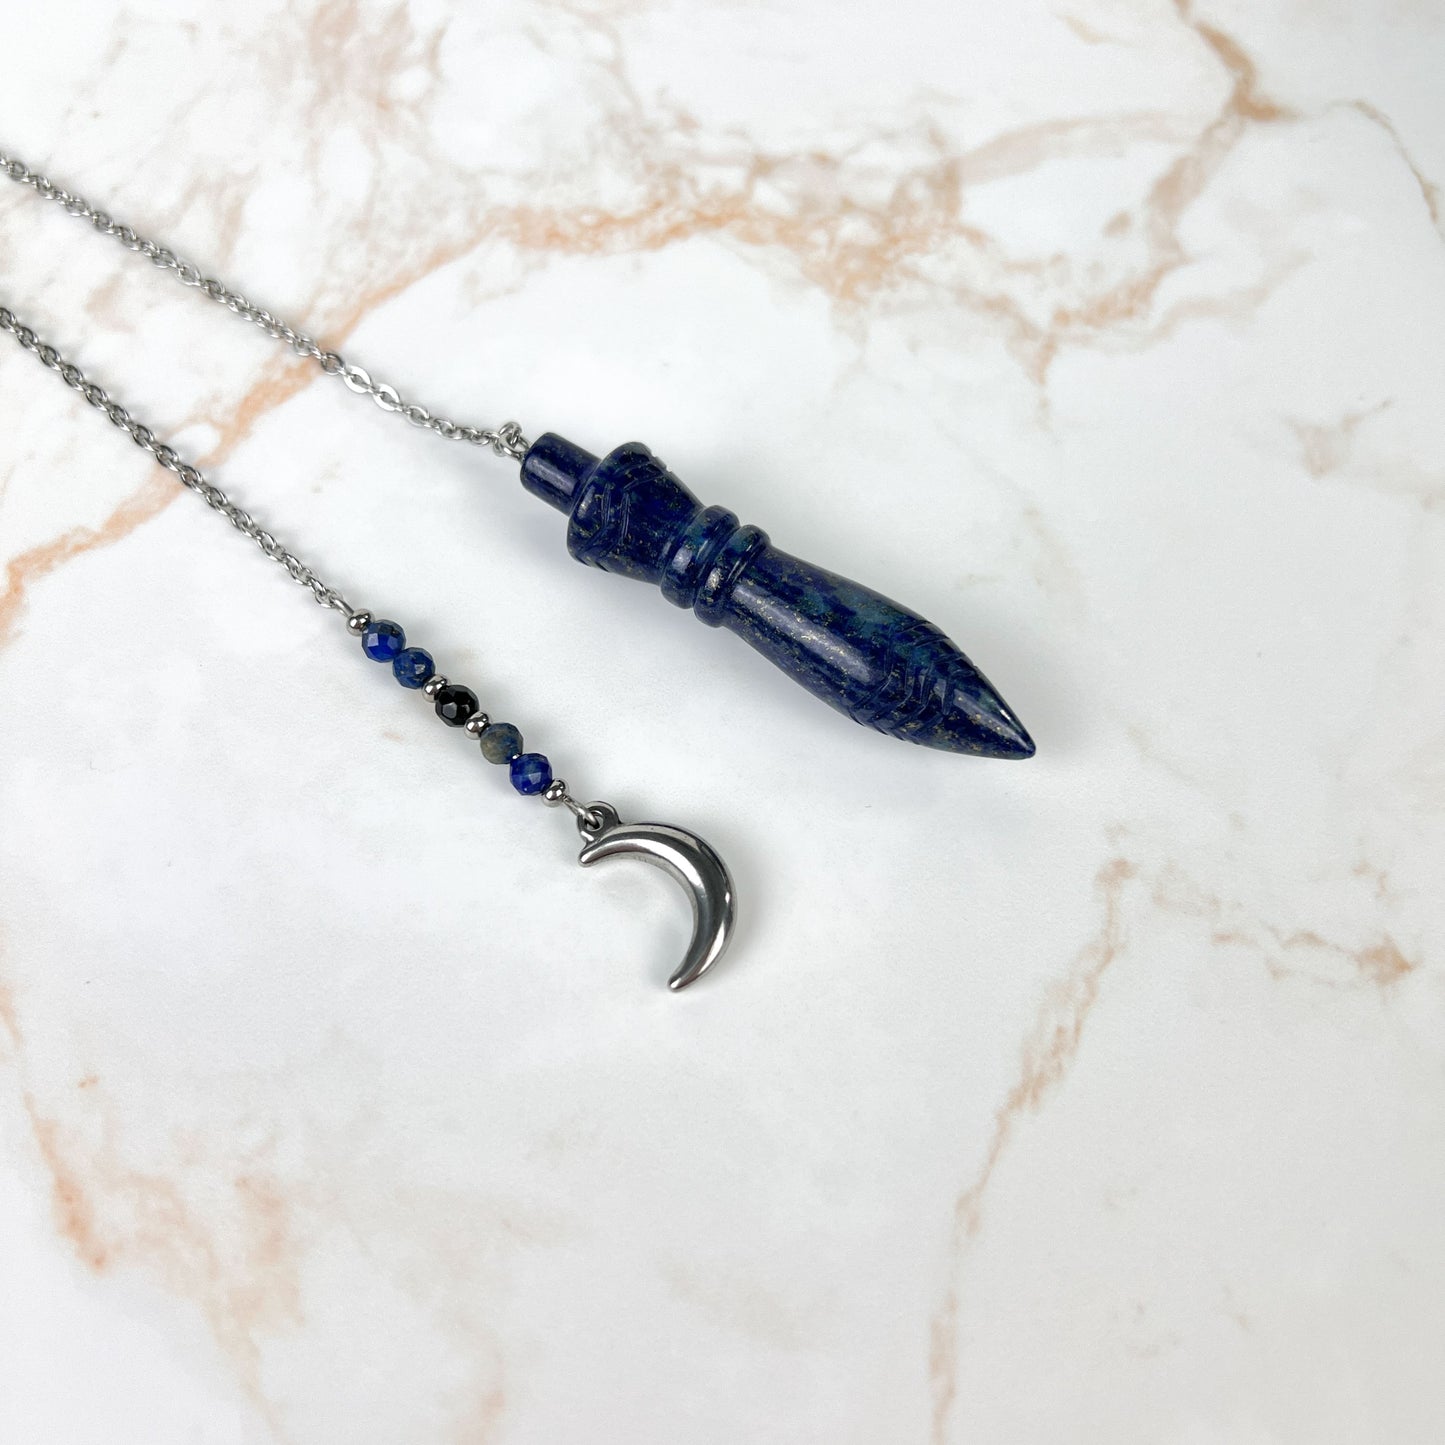 Engraved Egyptian Thot pendulum, lapis lazuli, onyx, stainless steel, Moon crescent charm